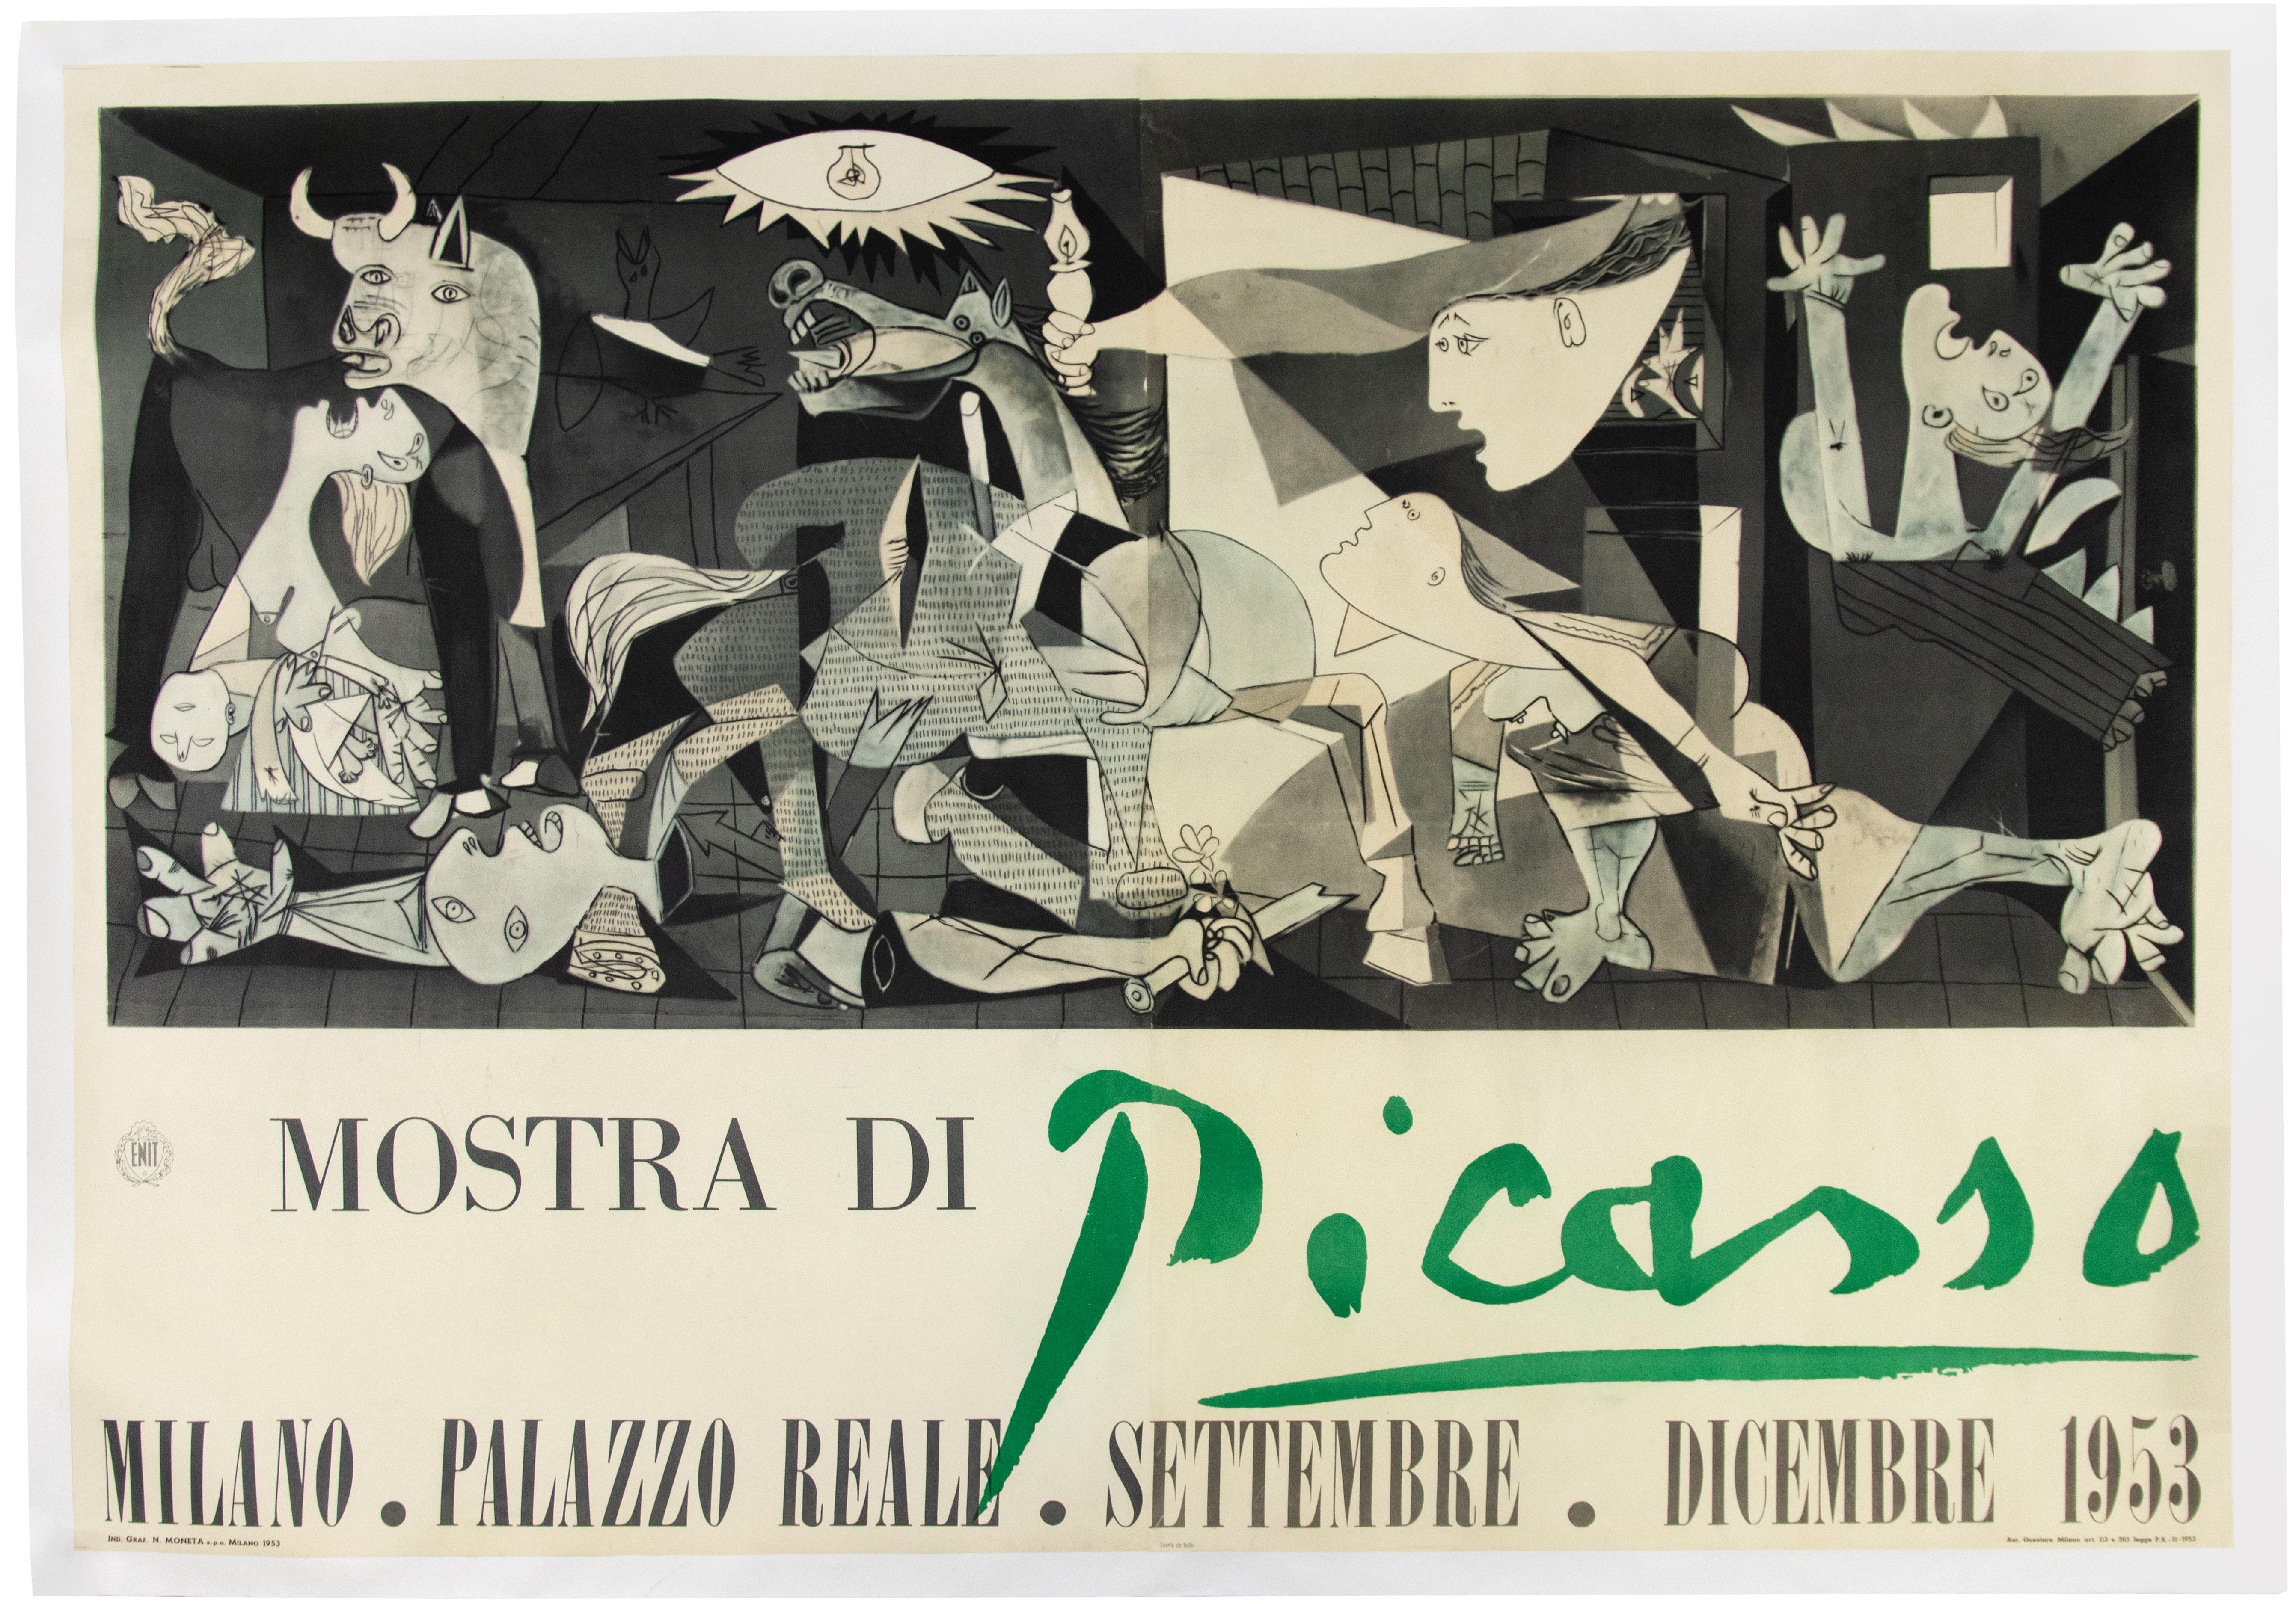 Did Picasso make prints?